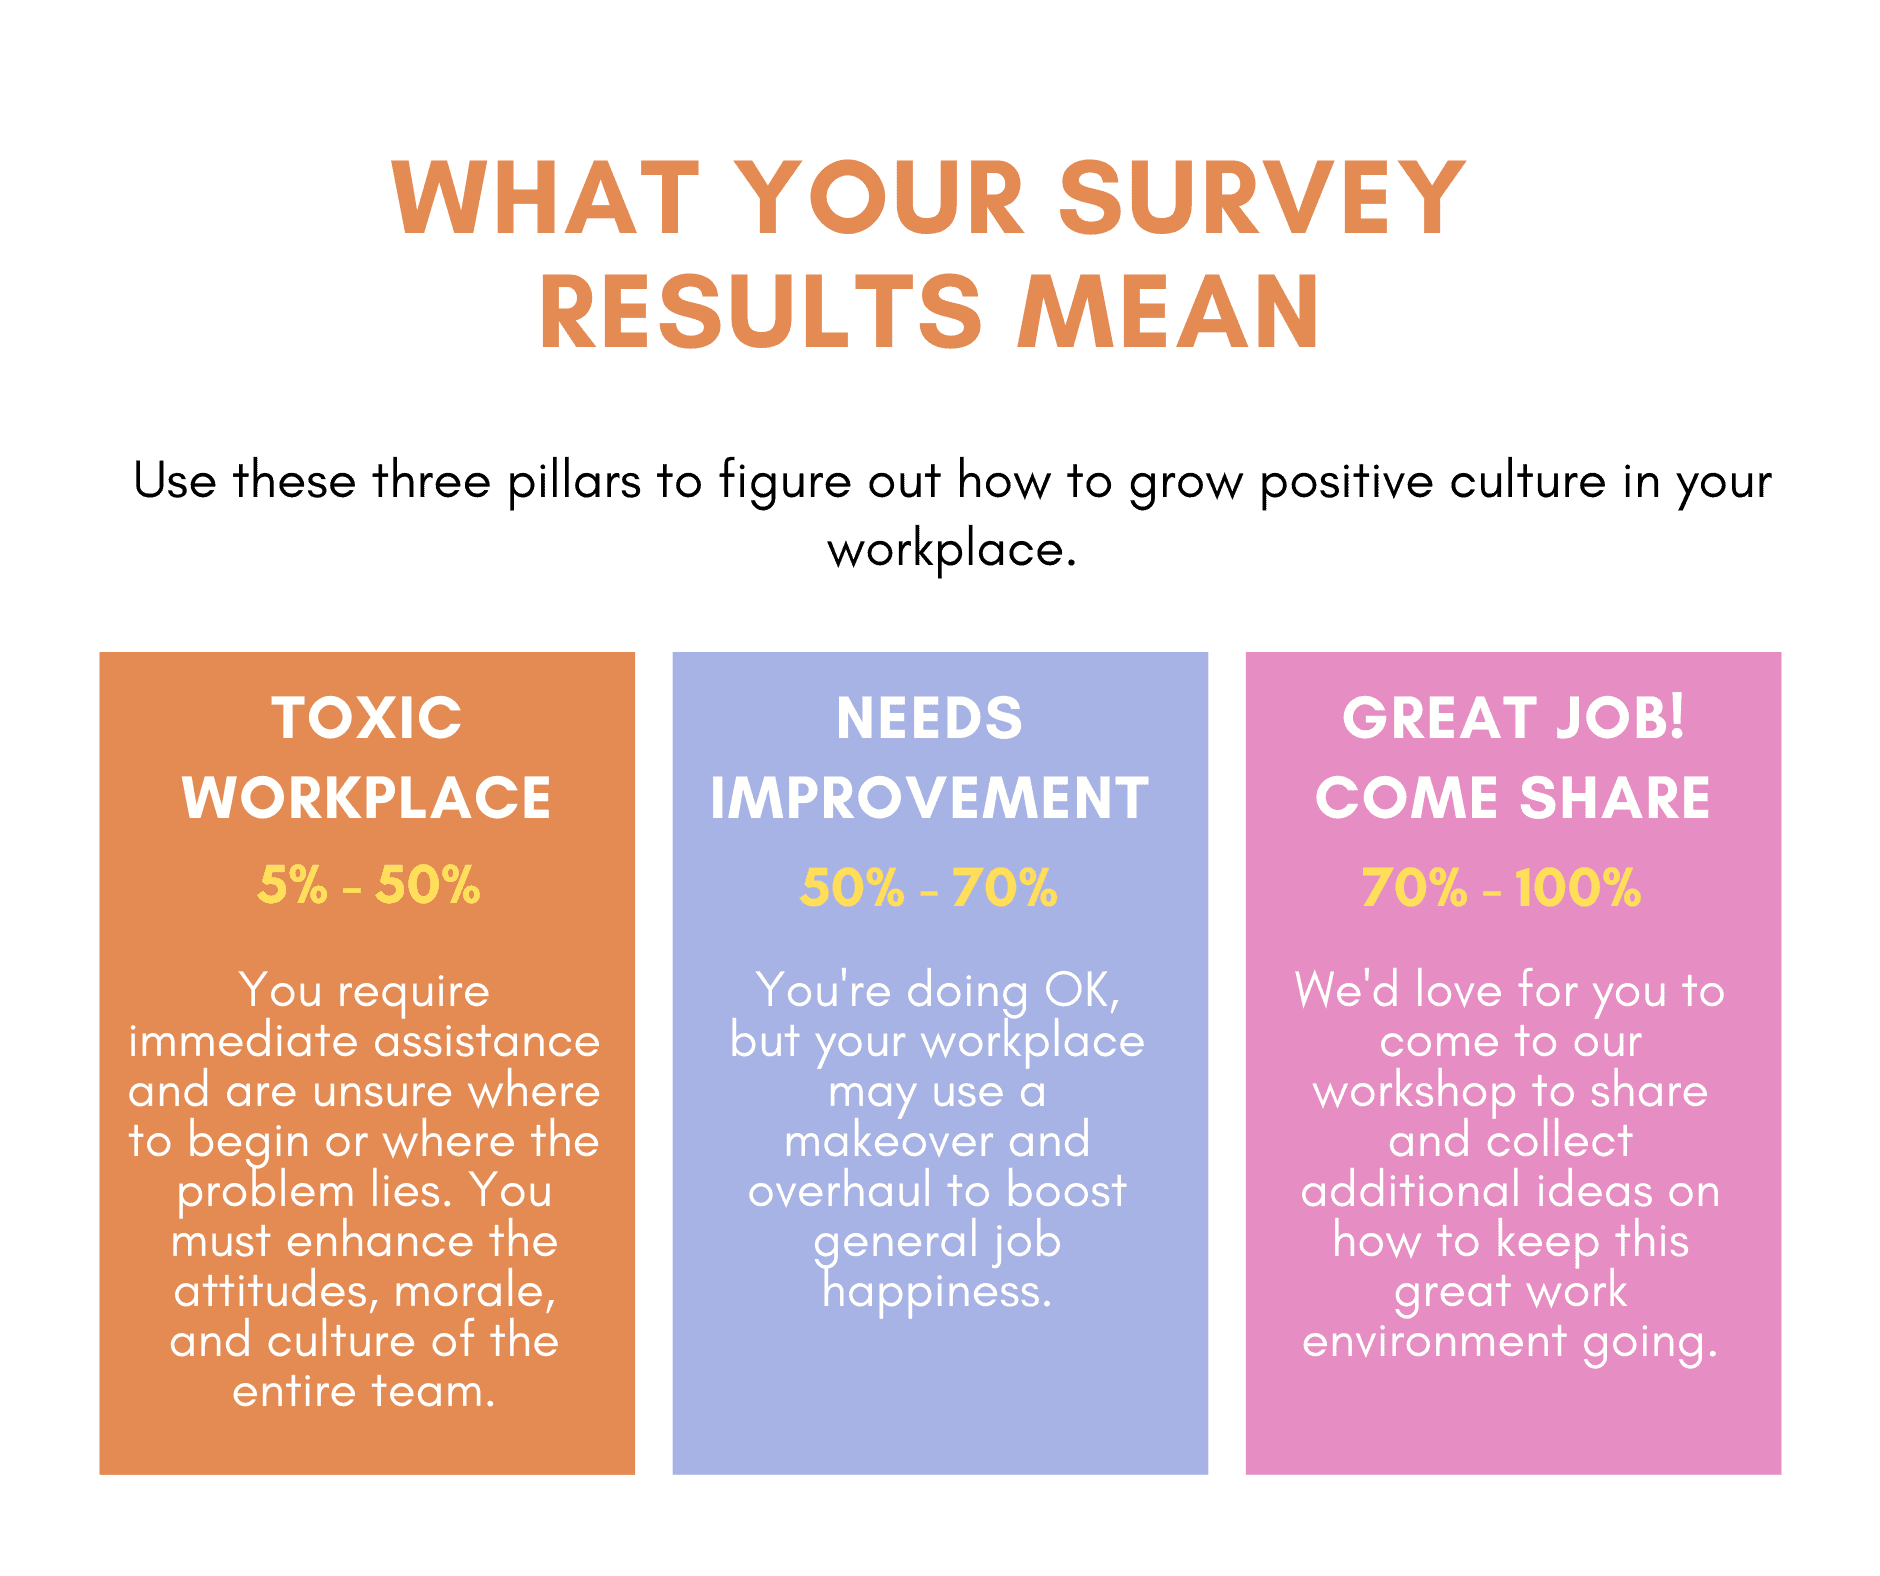 survey results